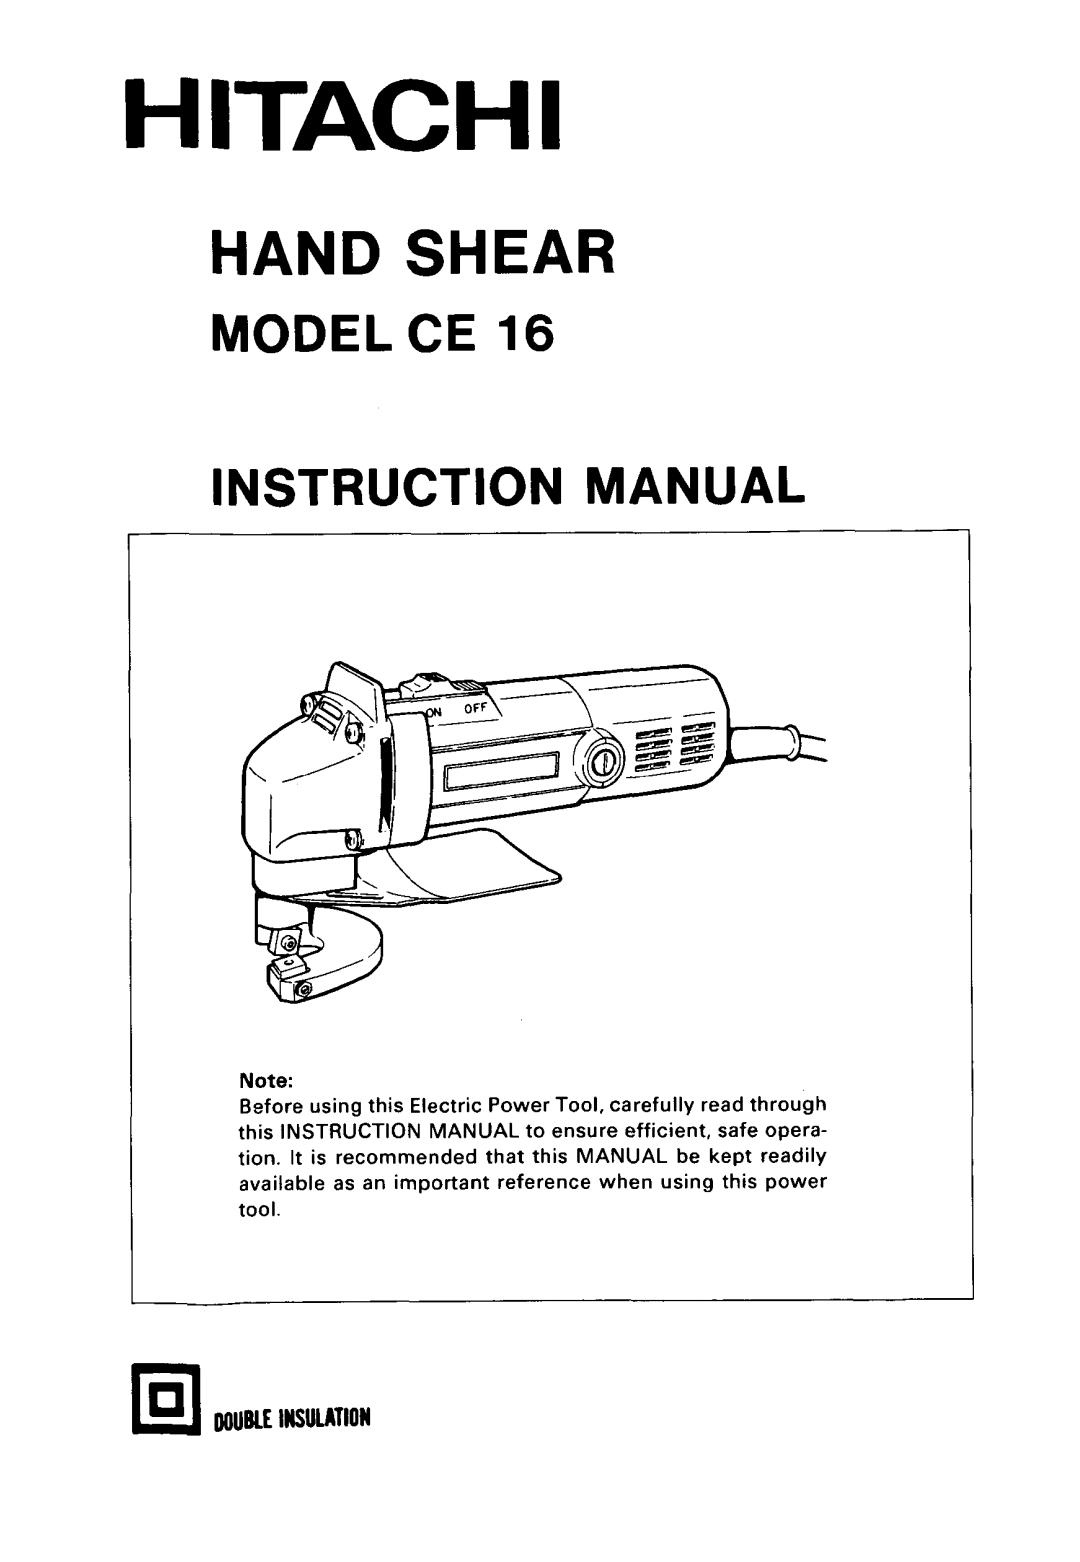 Hitachi CE 16 manual 